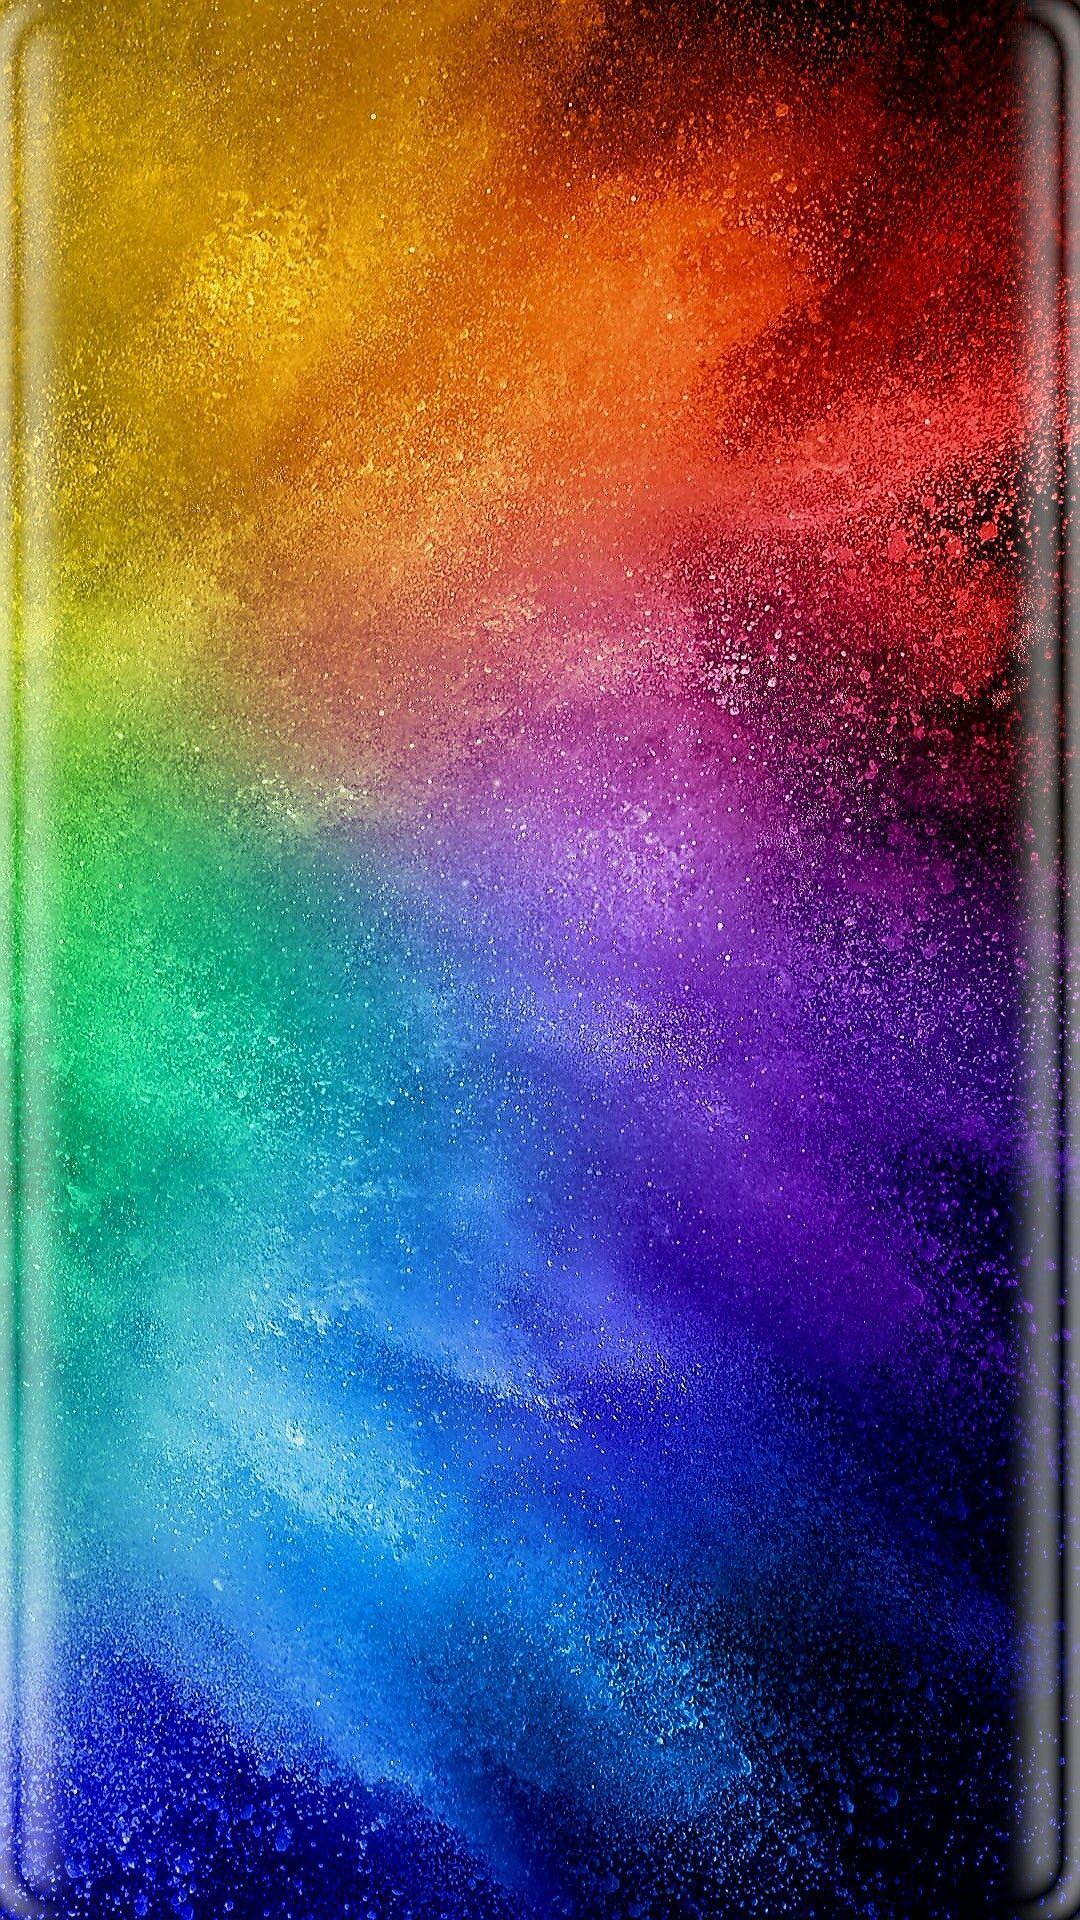 381 Phone Rainbow Wallpaper Stock Photos  Free  RoyaltyFree Stock Photos  from Dreamstime